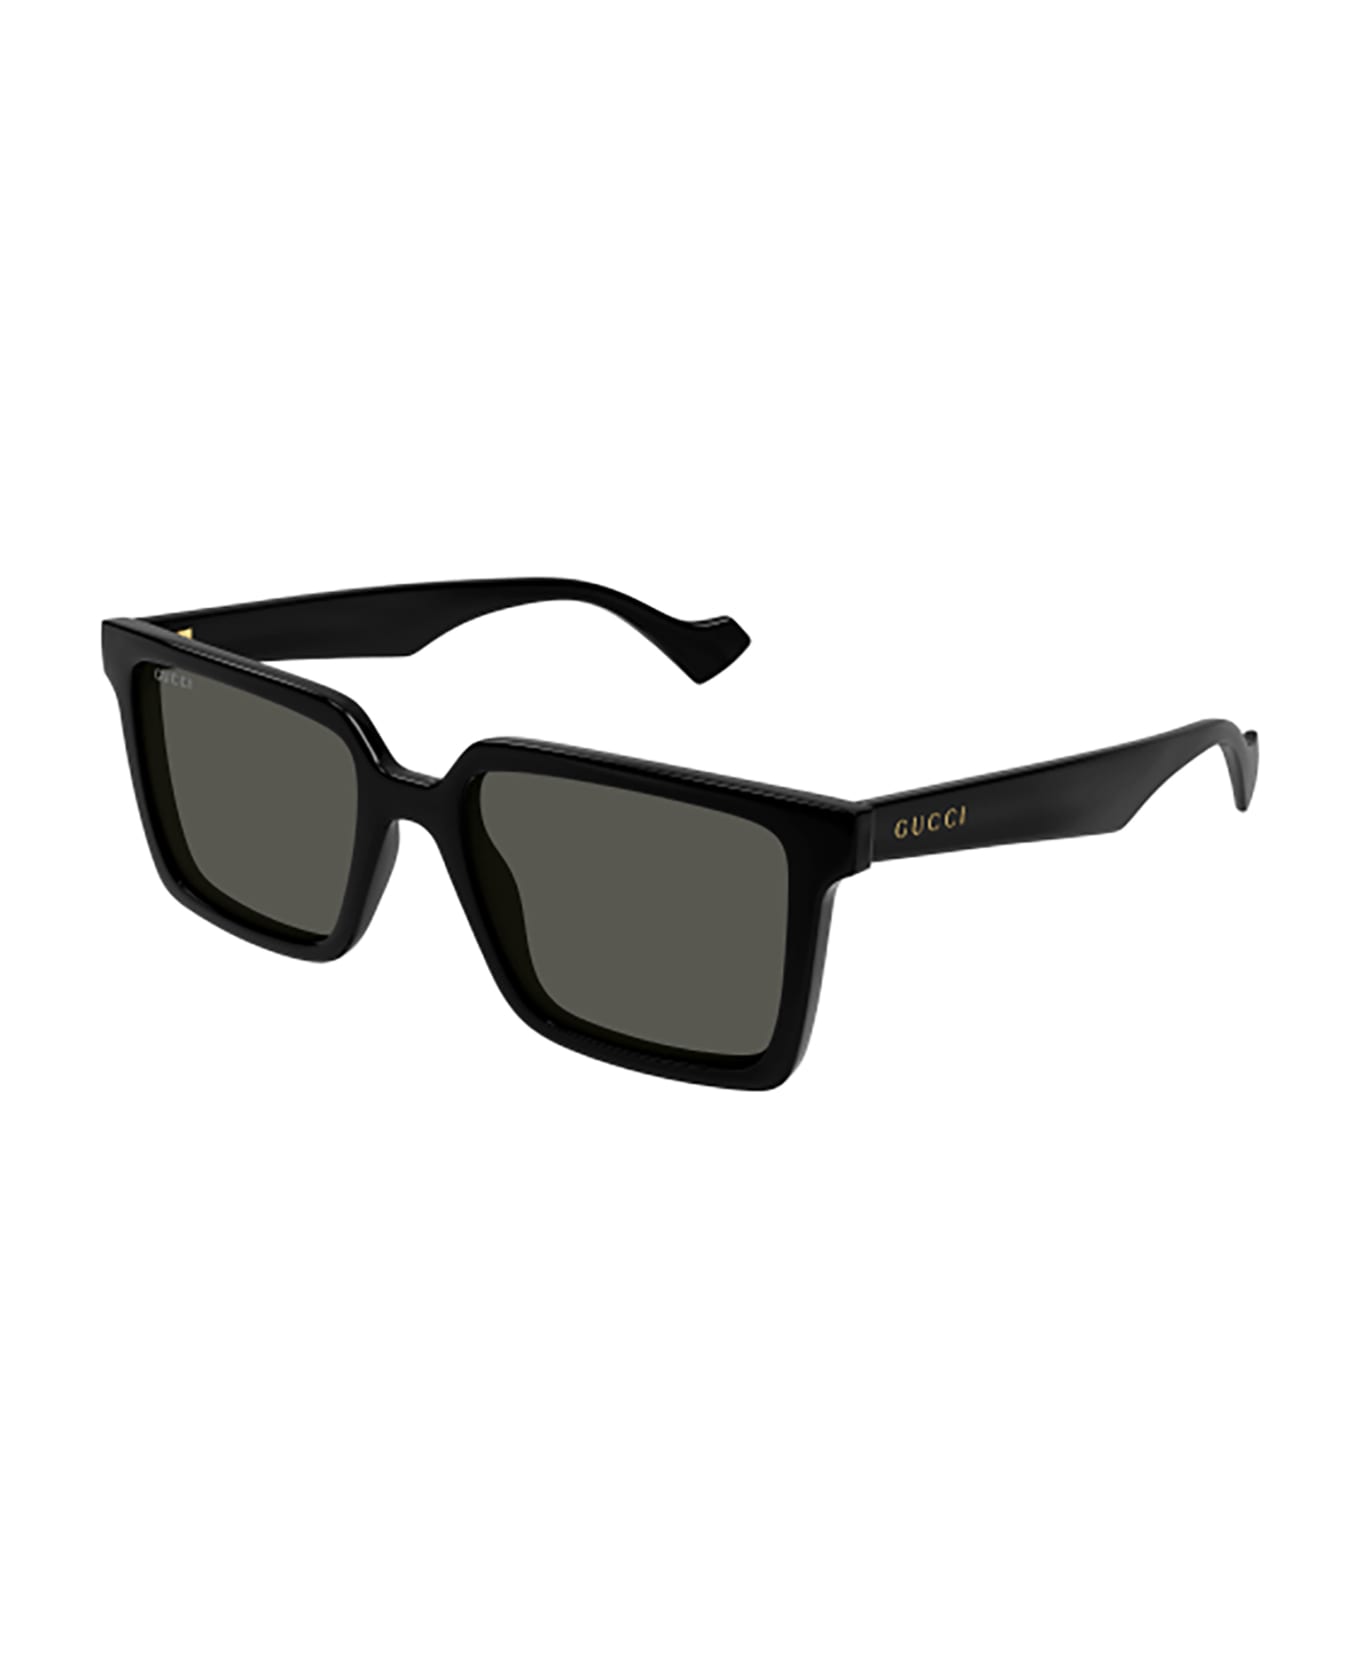 Gucci Eyewear GG1540S Sunglasses - Black Black Grey